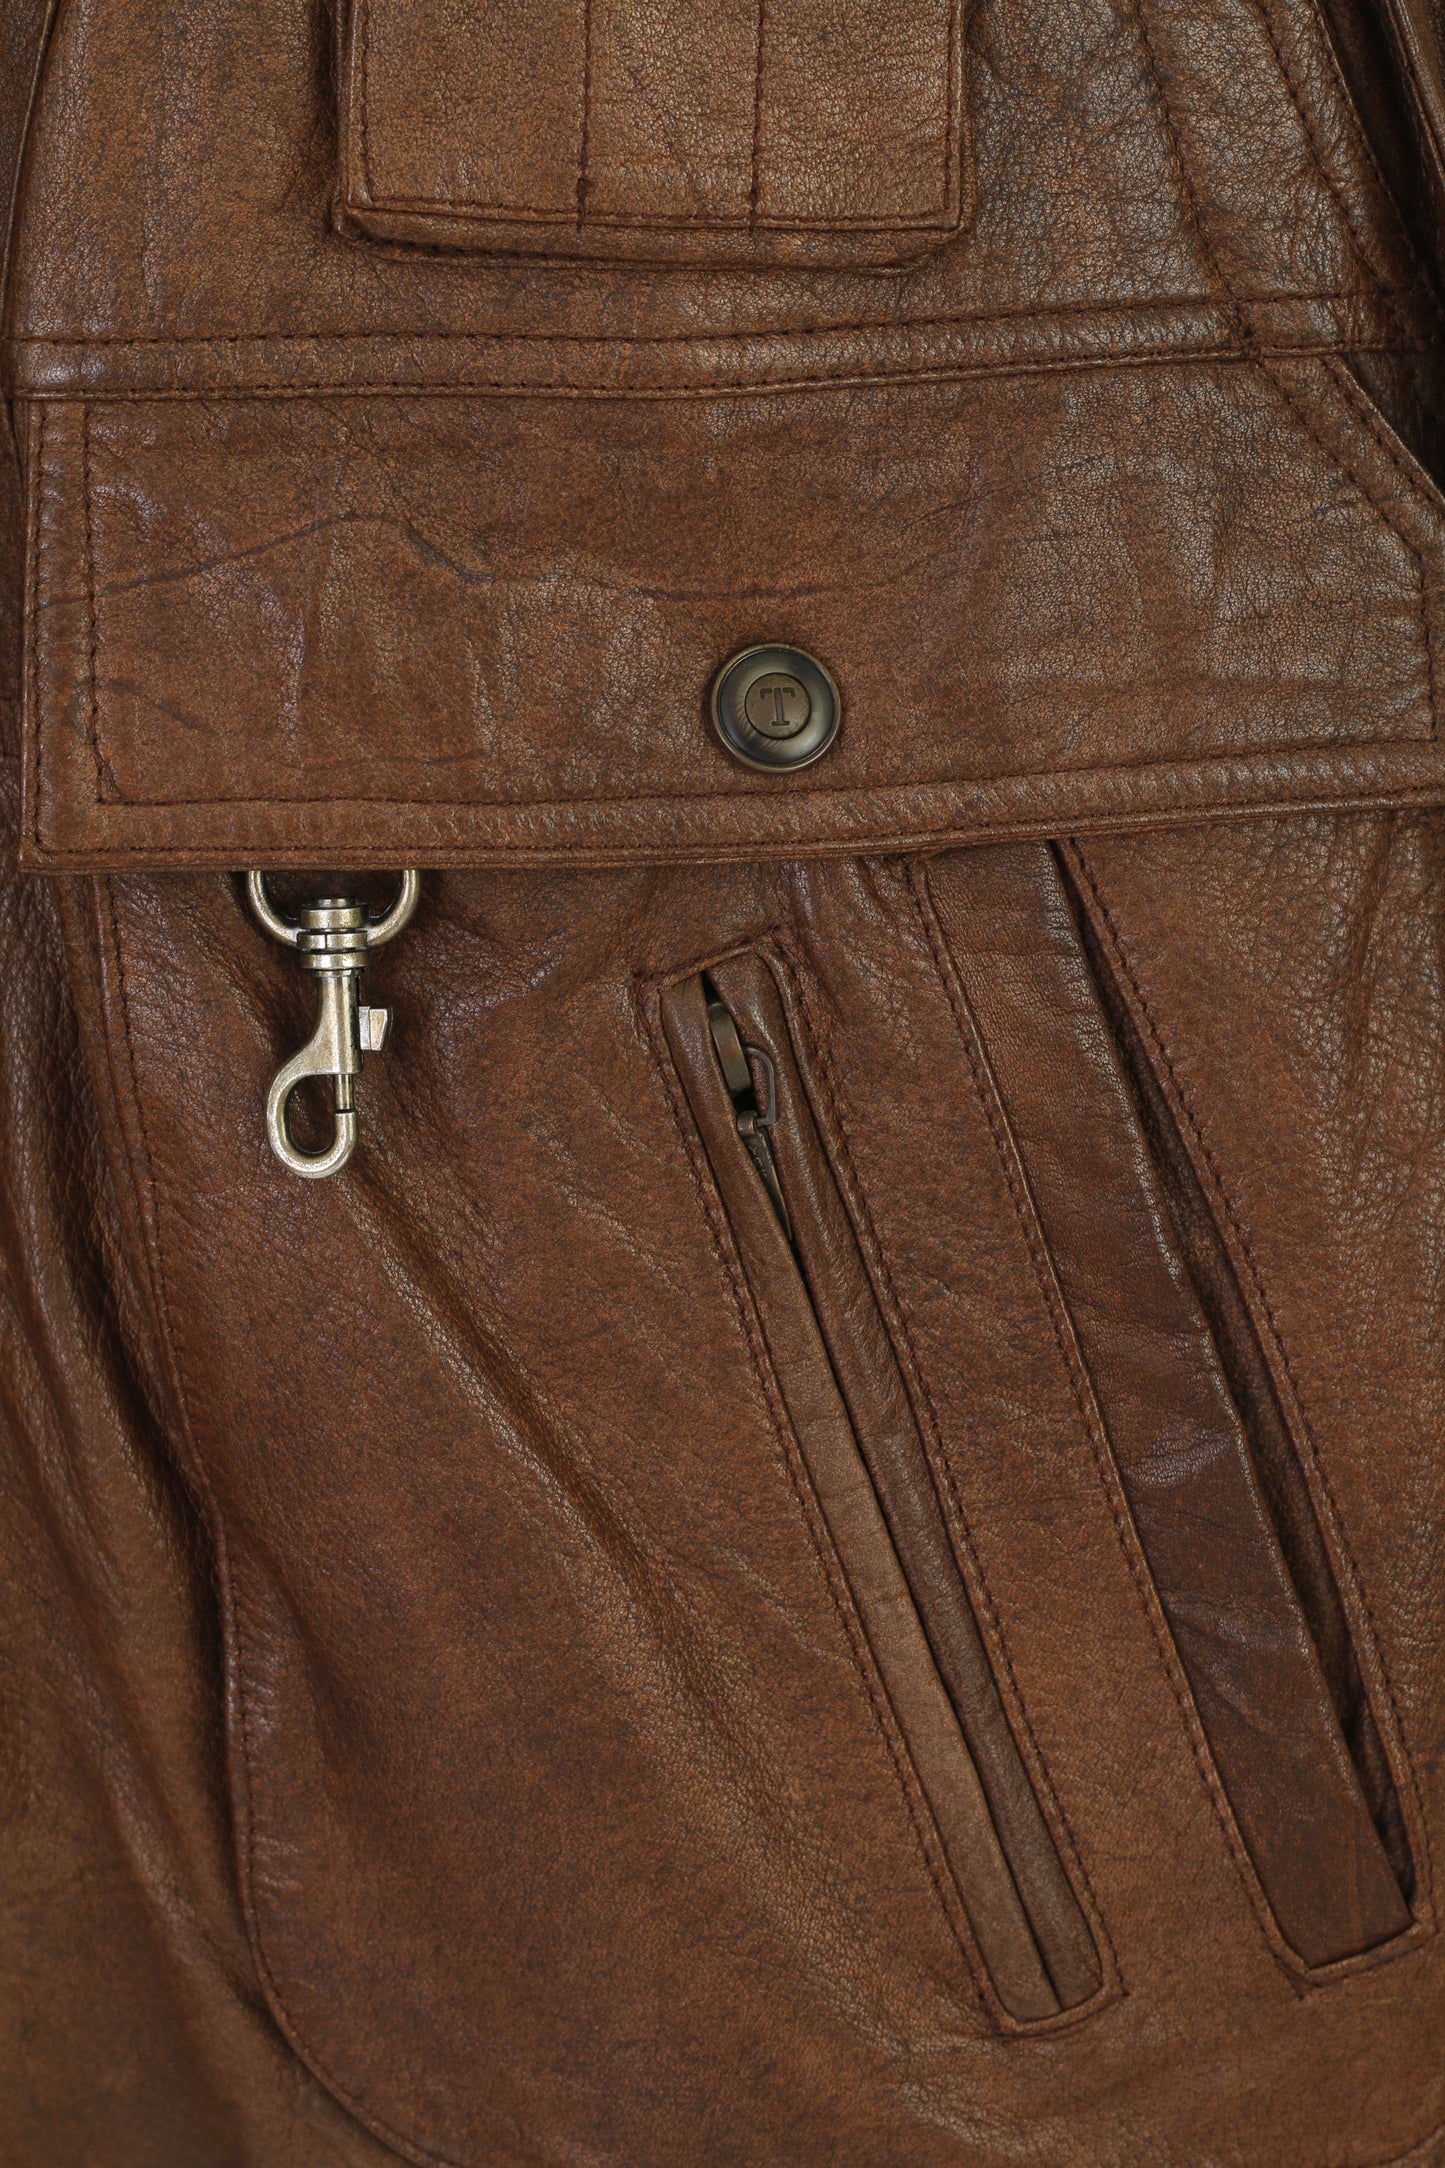 Original Trapper Men XL Gilet Cuir Marron Vintage Multi Poches Zip Up Vest